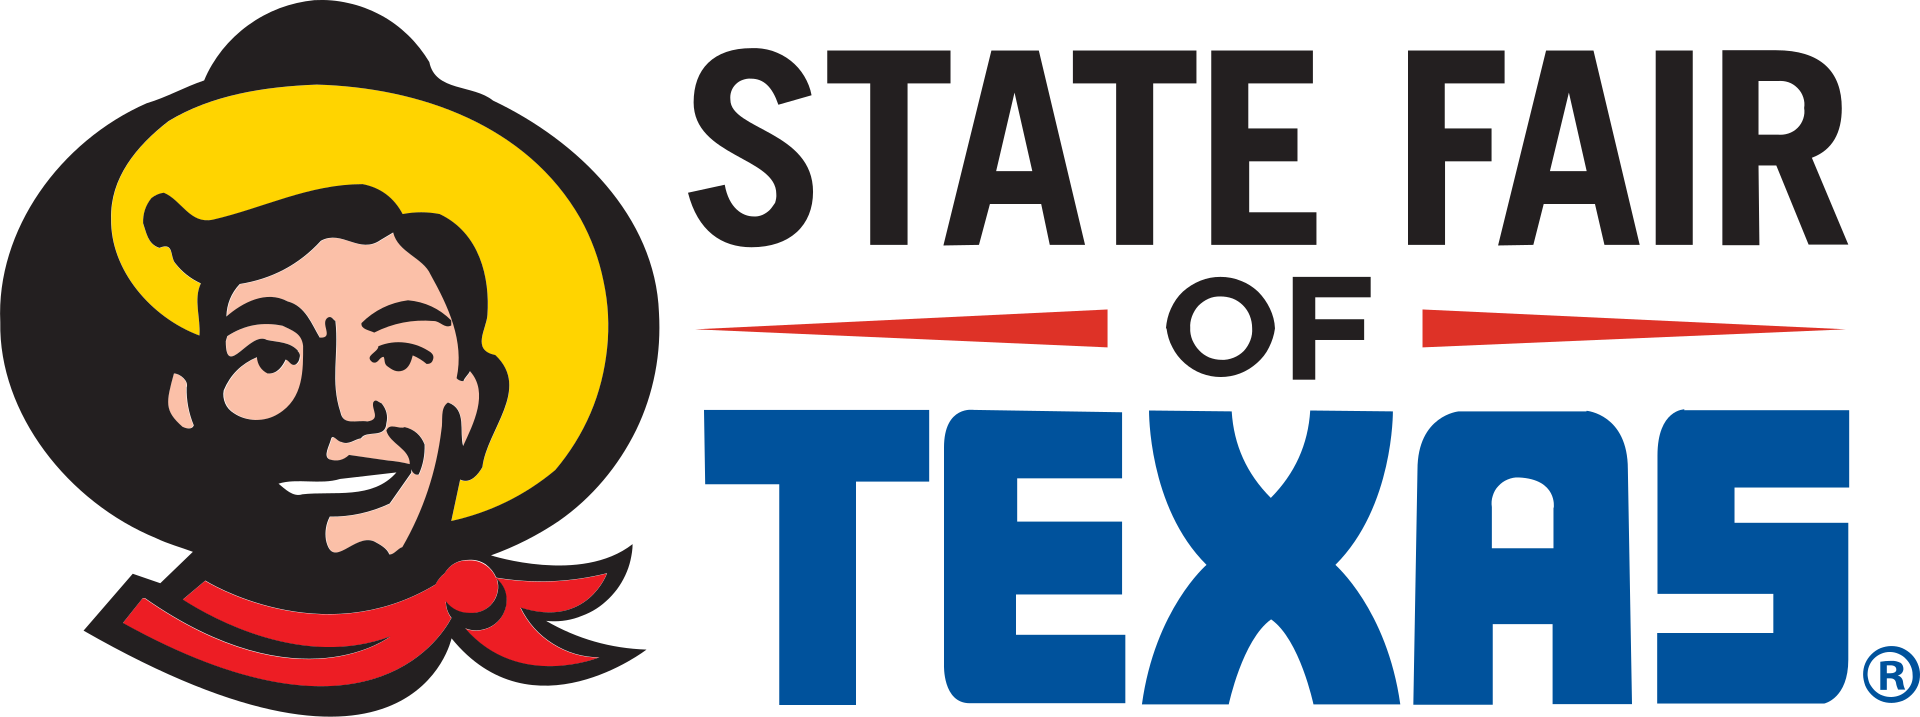 Cotton Bowlstadium Logo